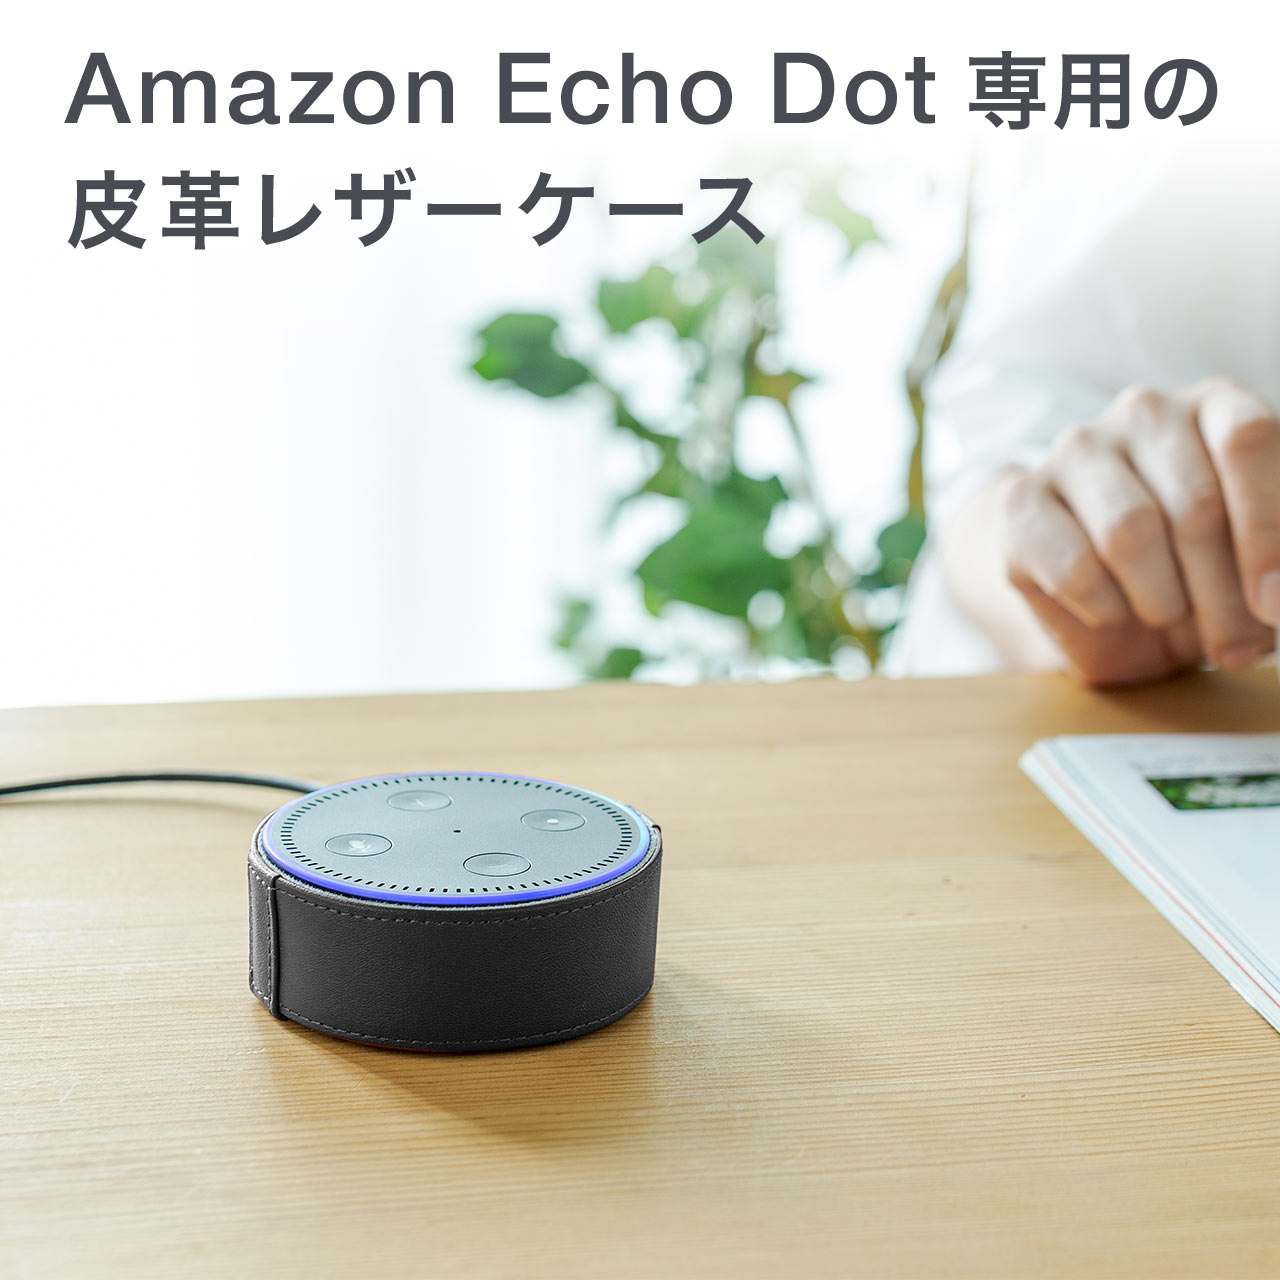 Amazon Echo Dotp{vP[Xi2ndf/2017NfpEubNj 200-CASE001BK